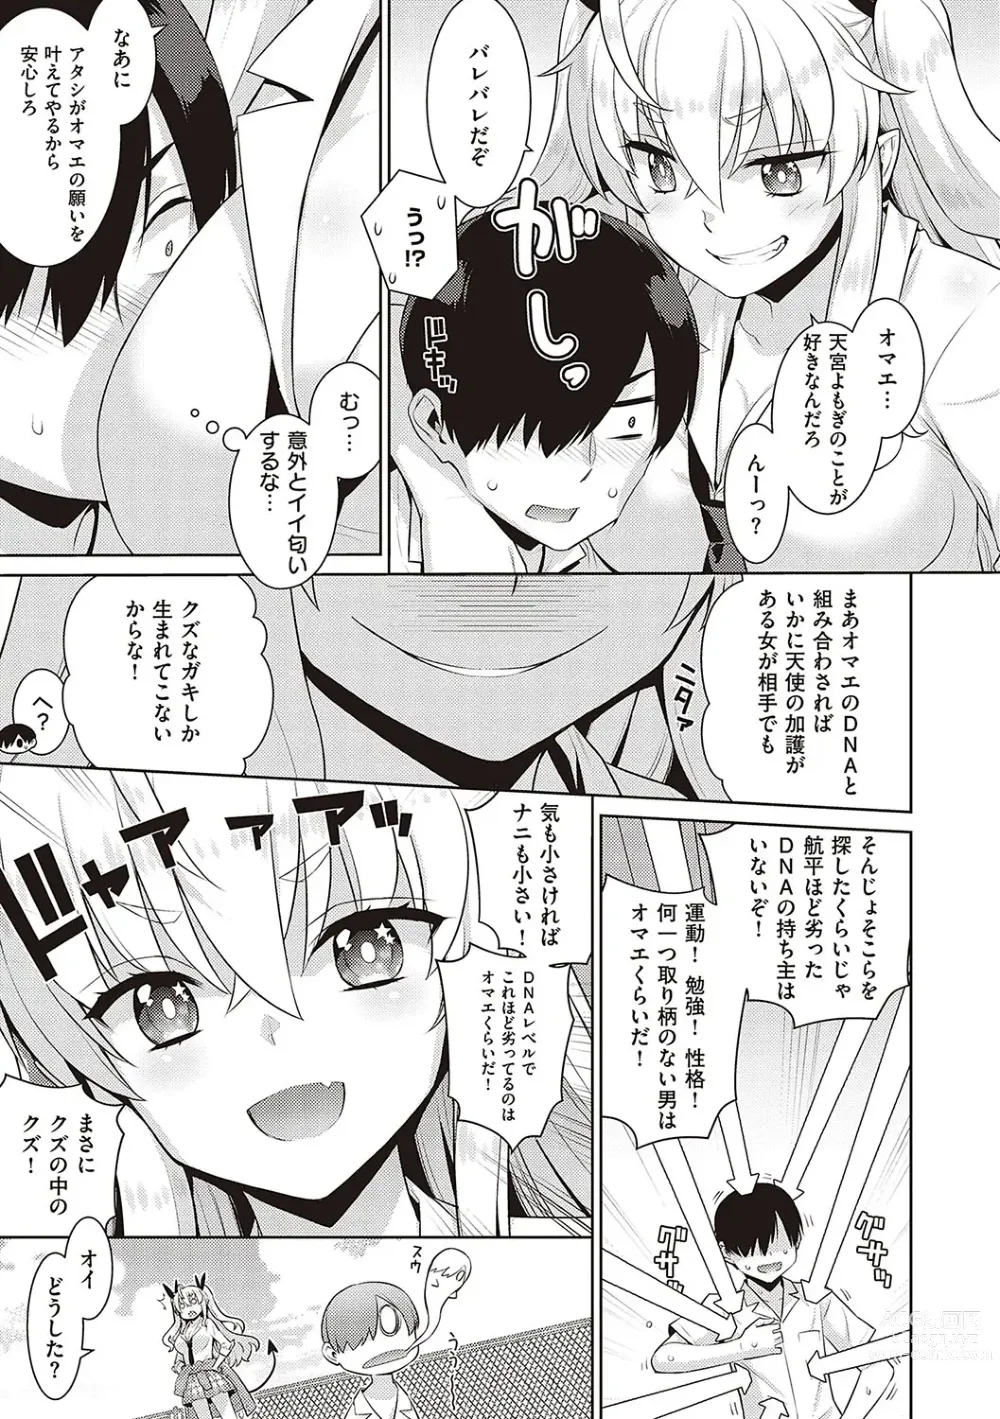 Page 12 of manga KOAKUMA DAISY